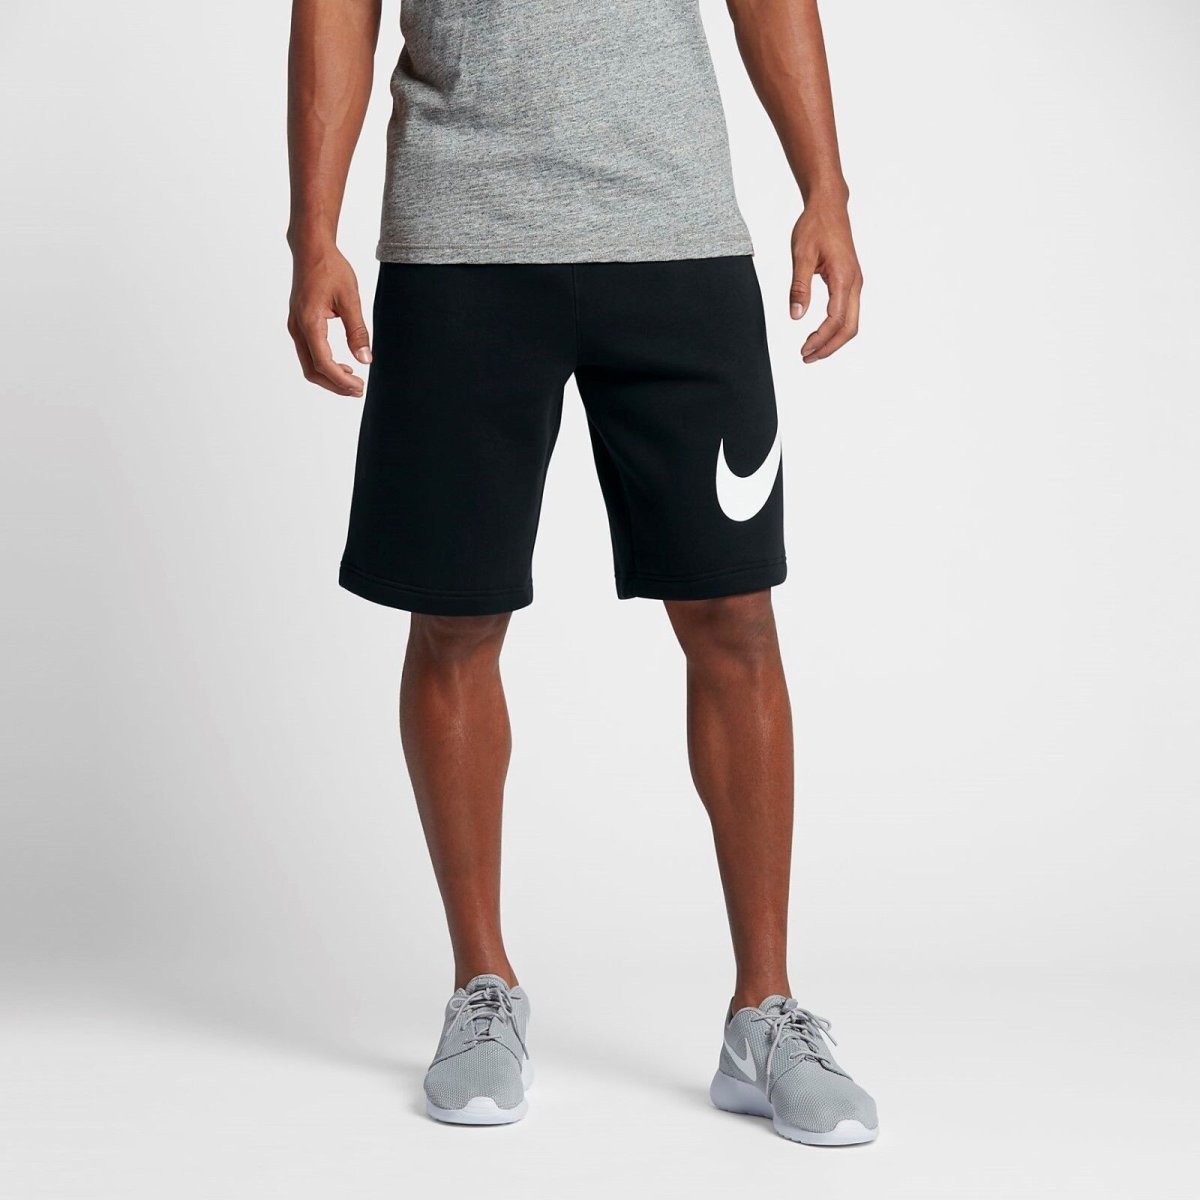 Nike NSW hbr shorts